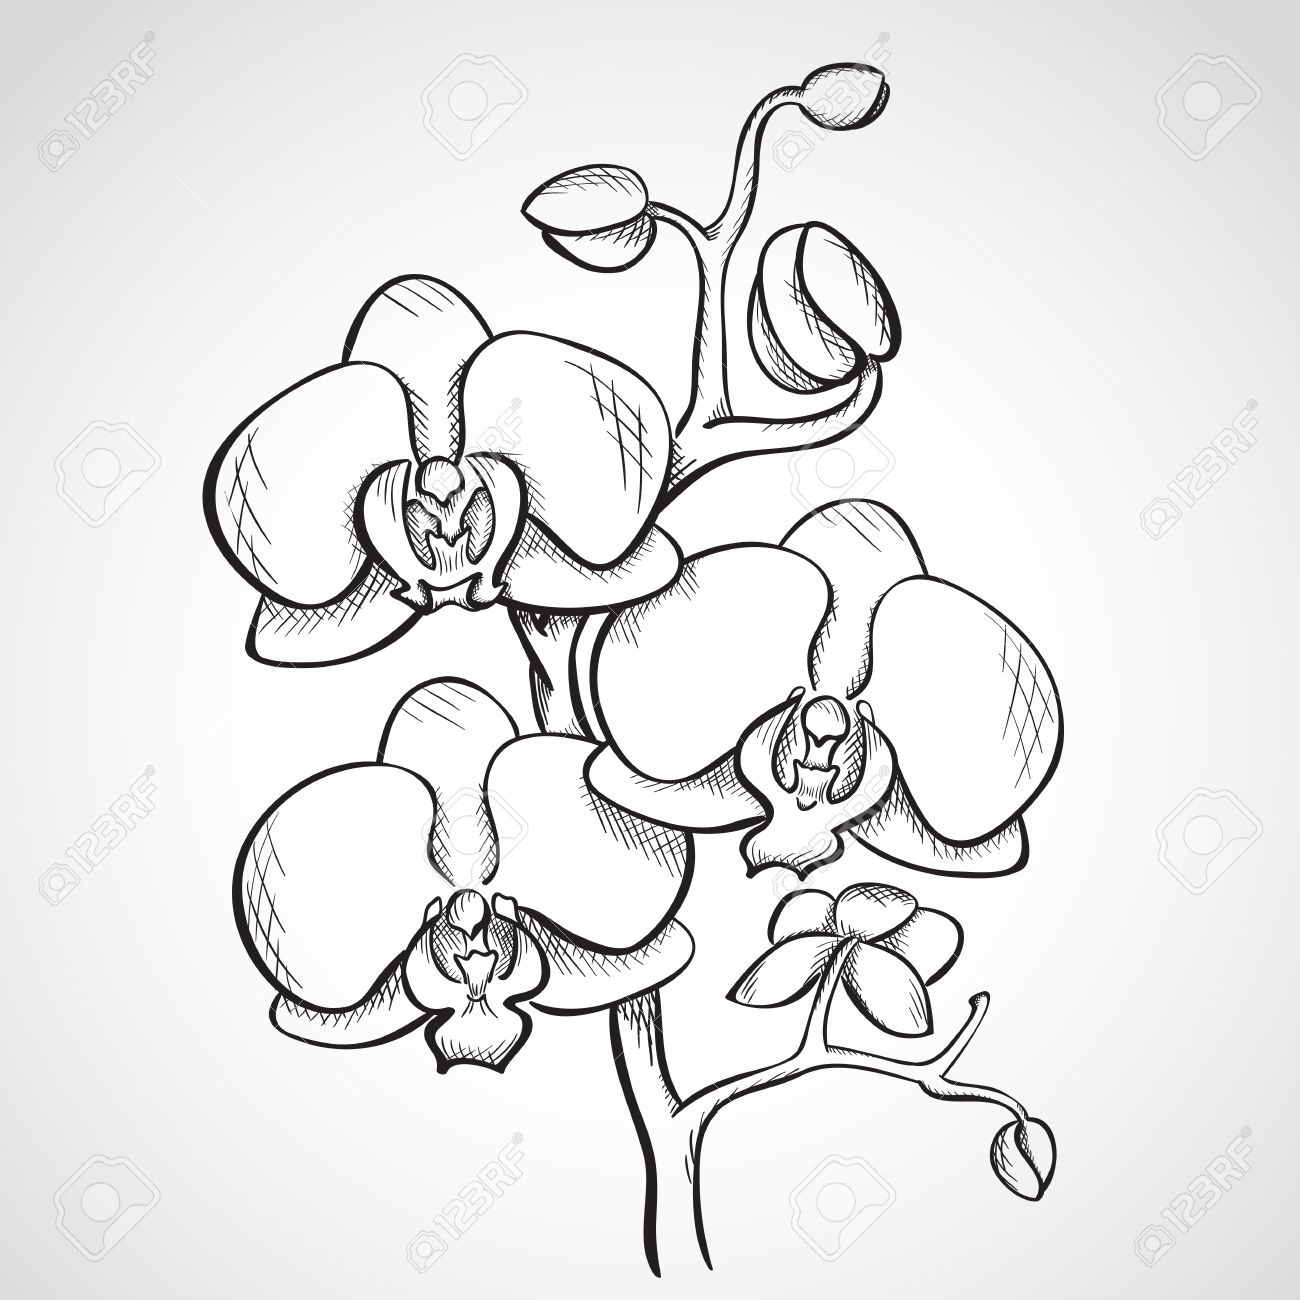 Sketch orchid branch